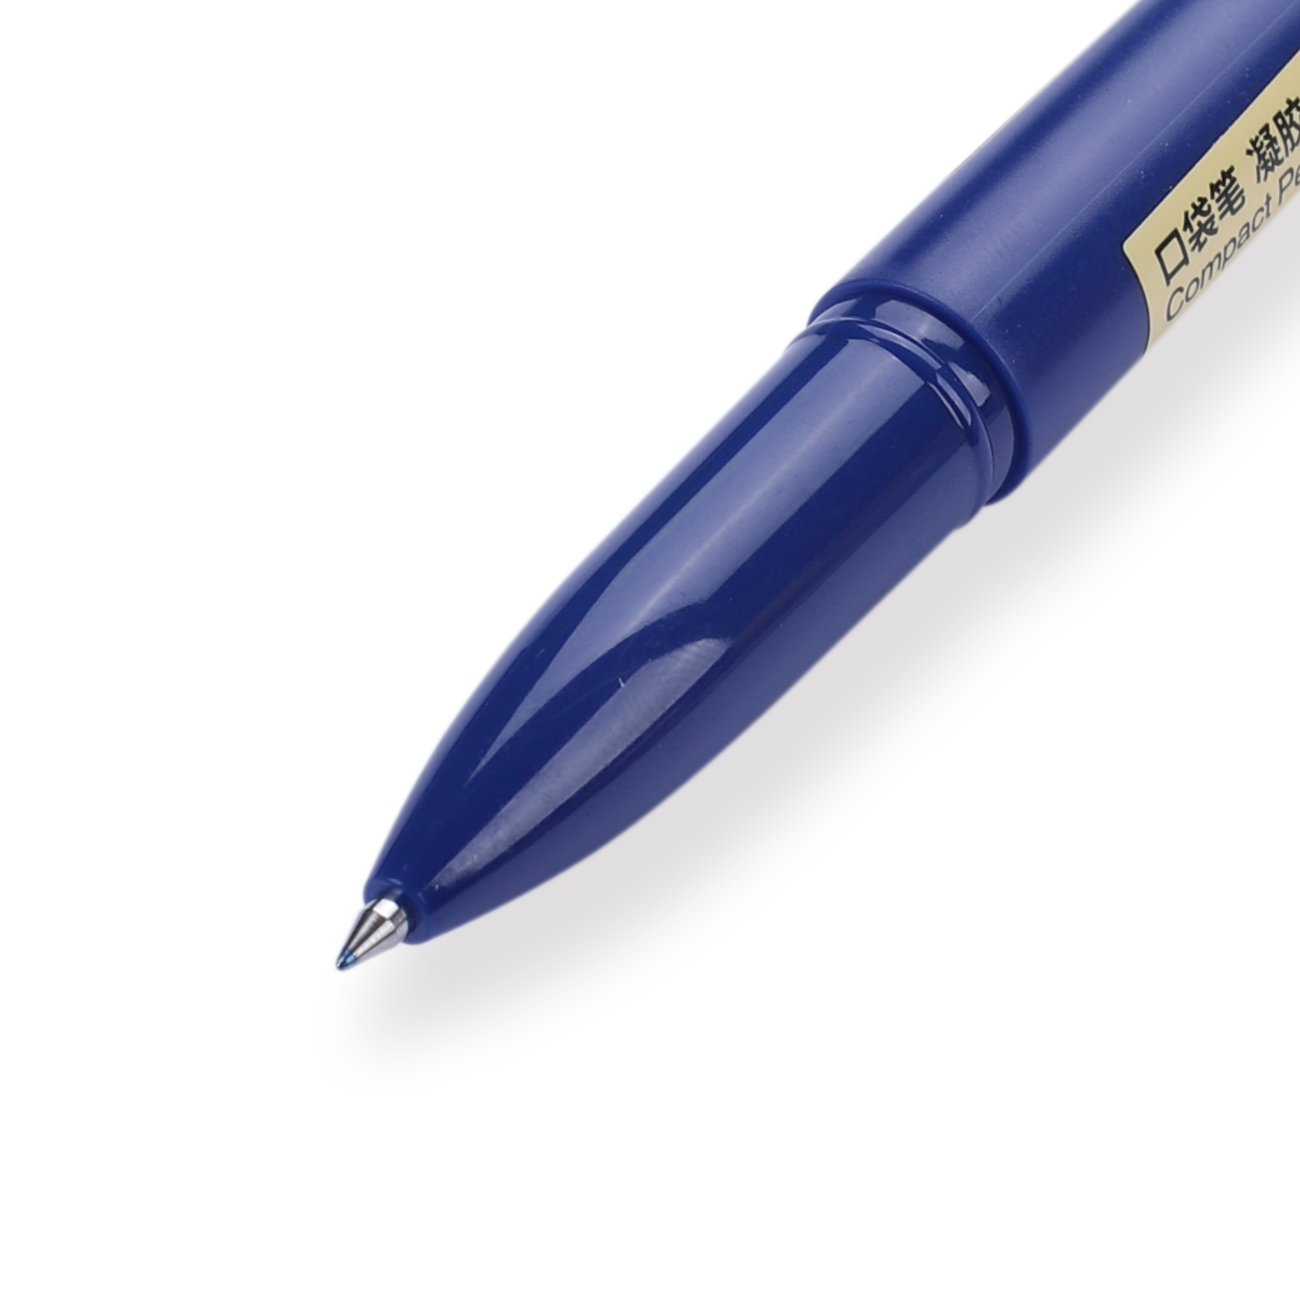 MUJI Smooth Gel Ink Pen, Blue